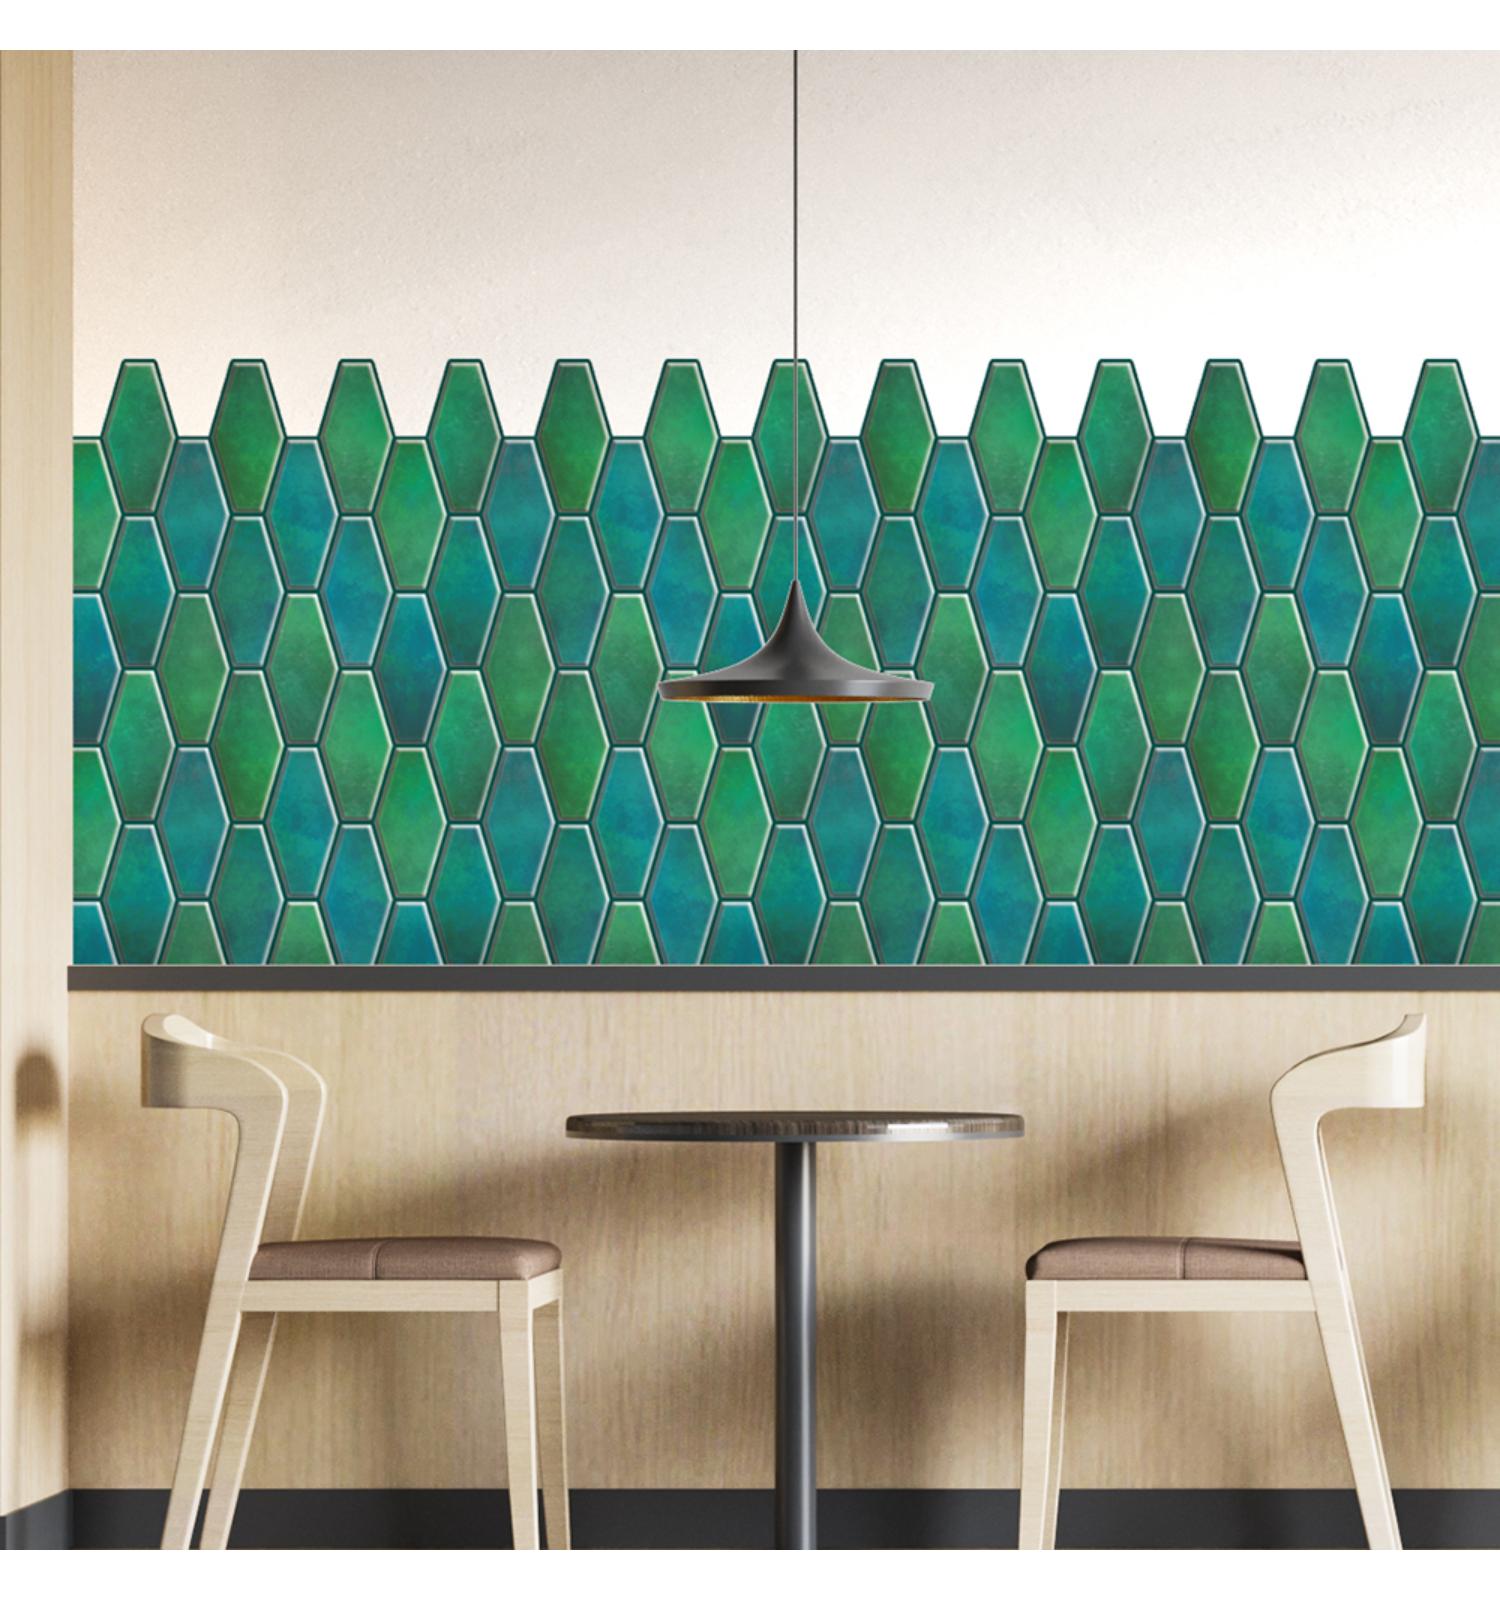 Gradient Green Peel and Stick Backsplash | Kitchen Backsplash wall Tiles